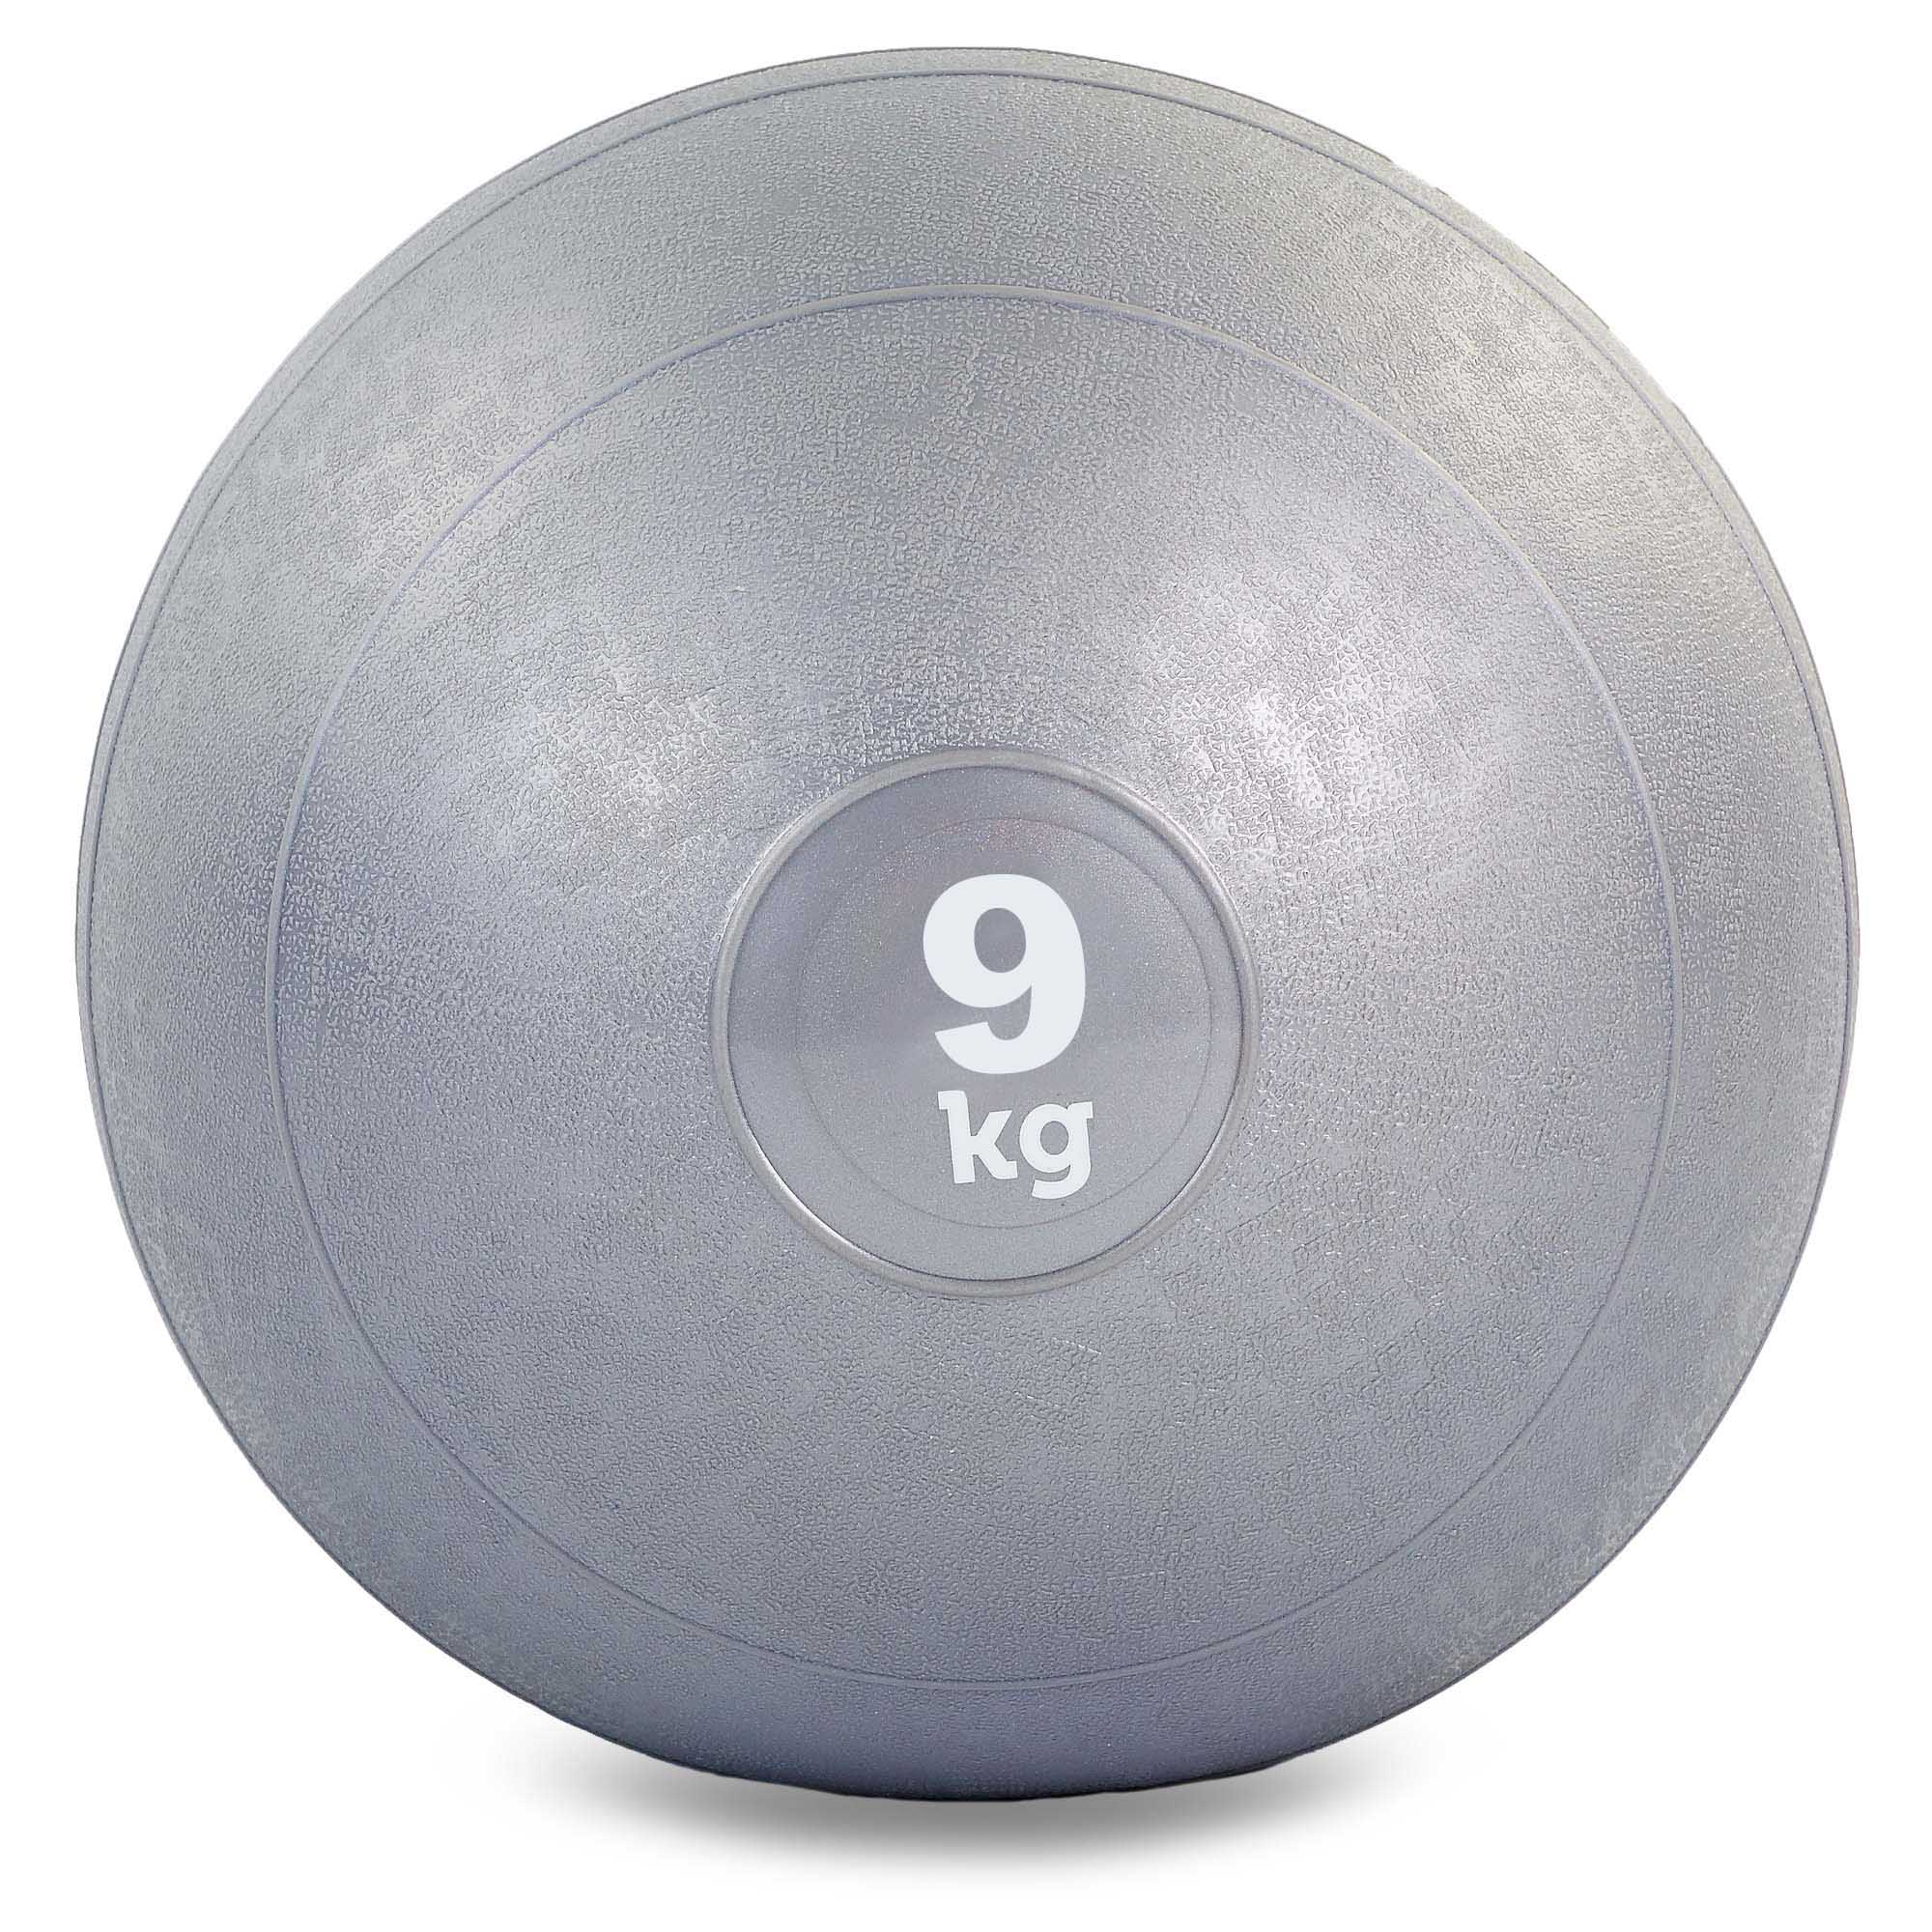 Мяч для кроссфита Record FI-5165-9 9кг Серый